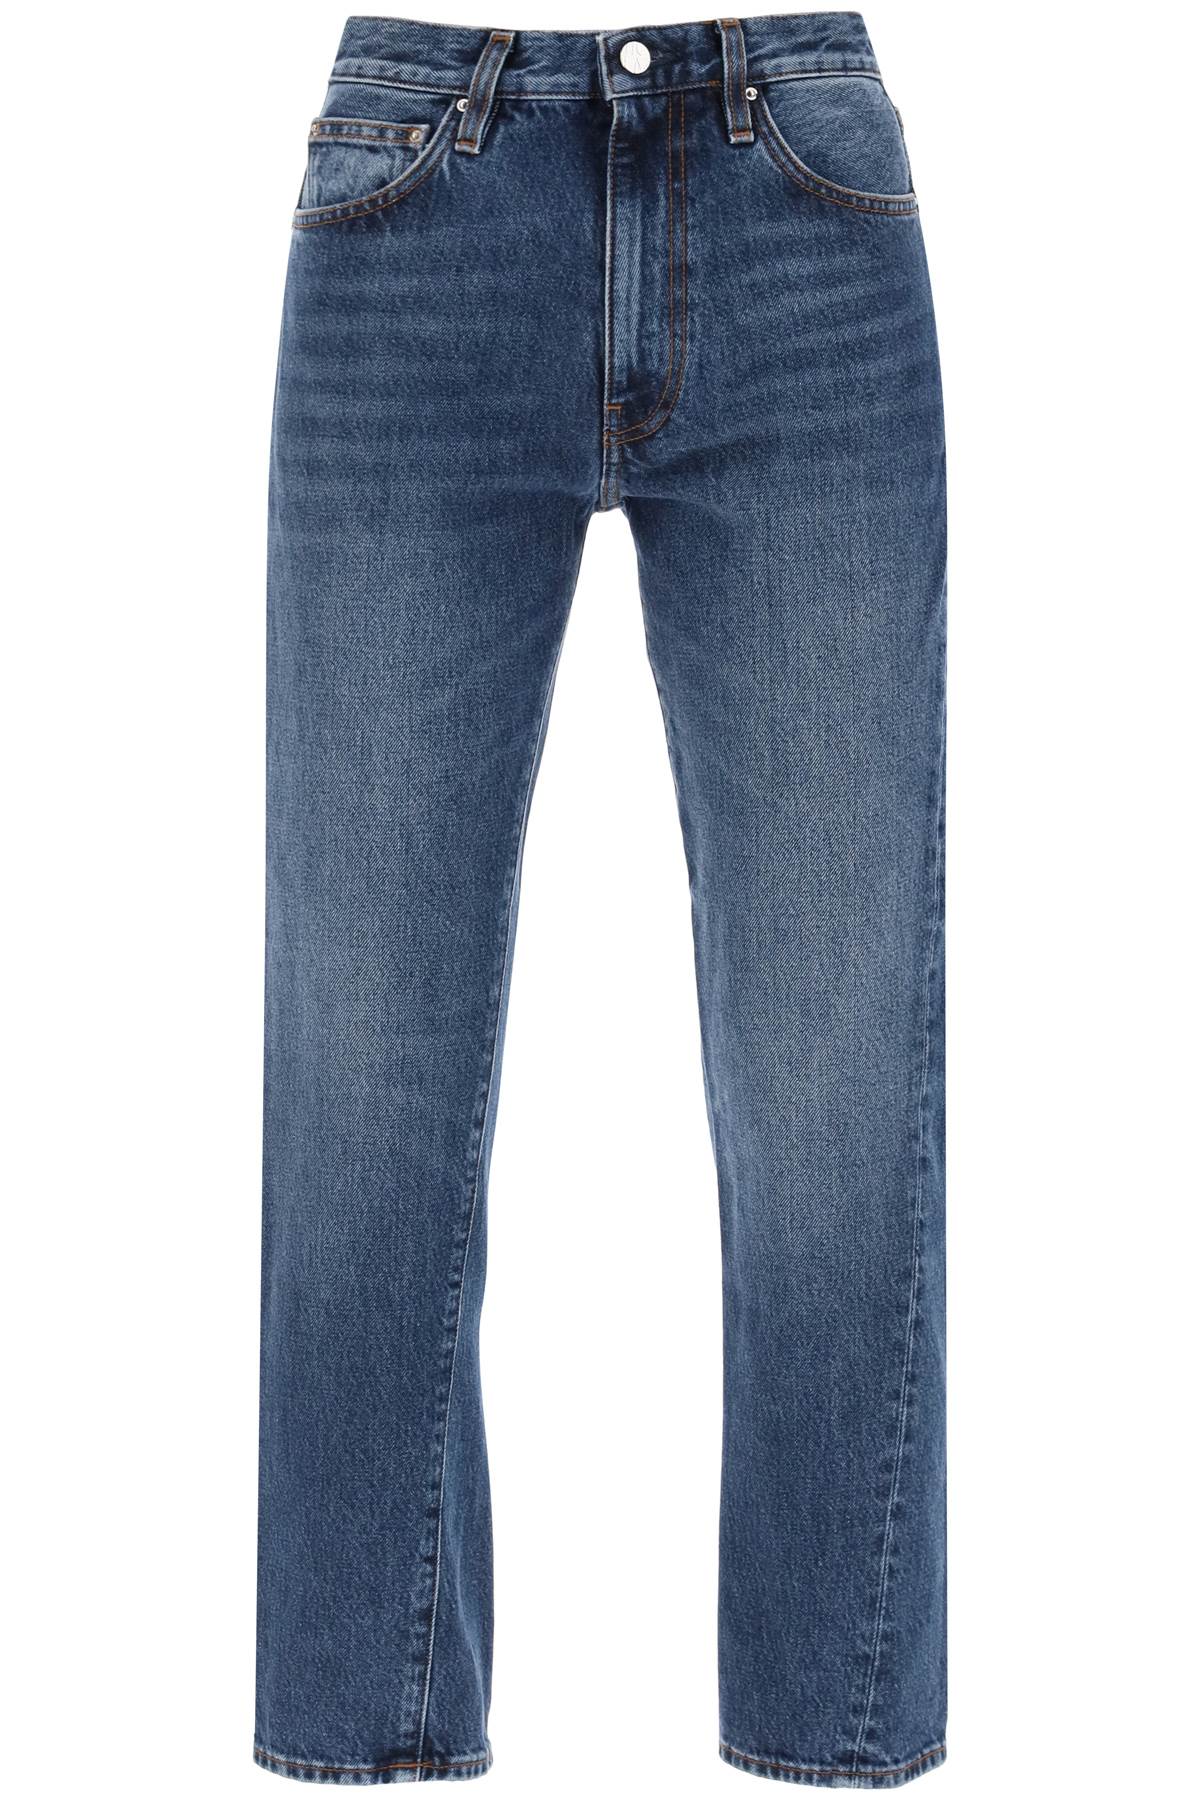 TOTEME twisted seam slim jeans